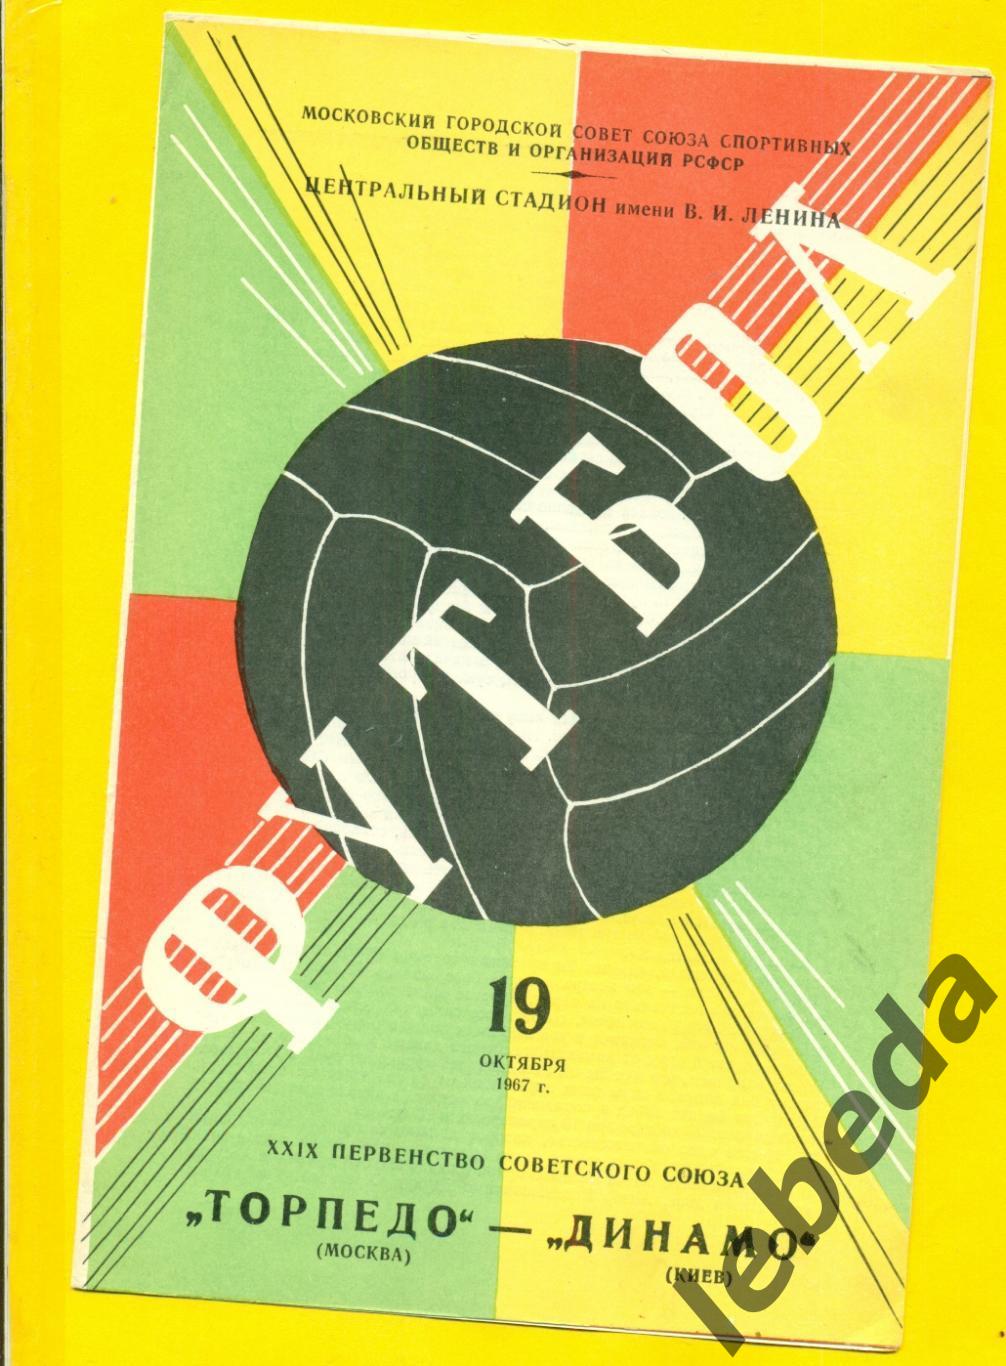 Торпедо Москва - Динамо Киев - 1967 г. (19.10.67.)